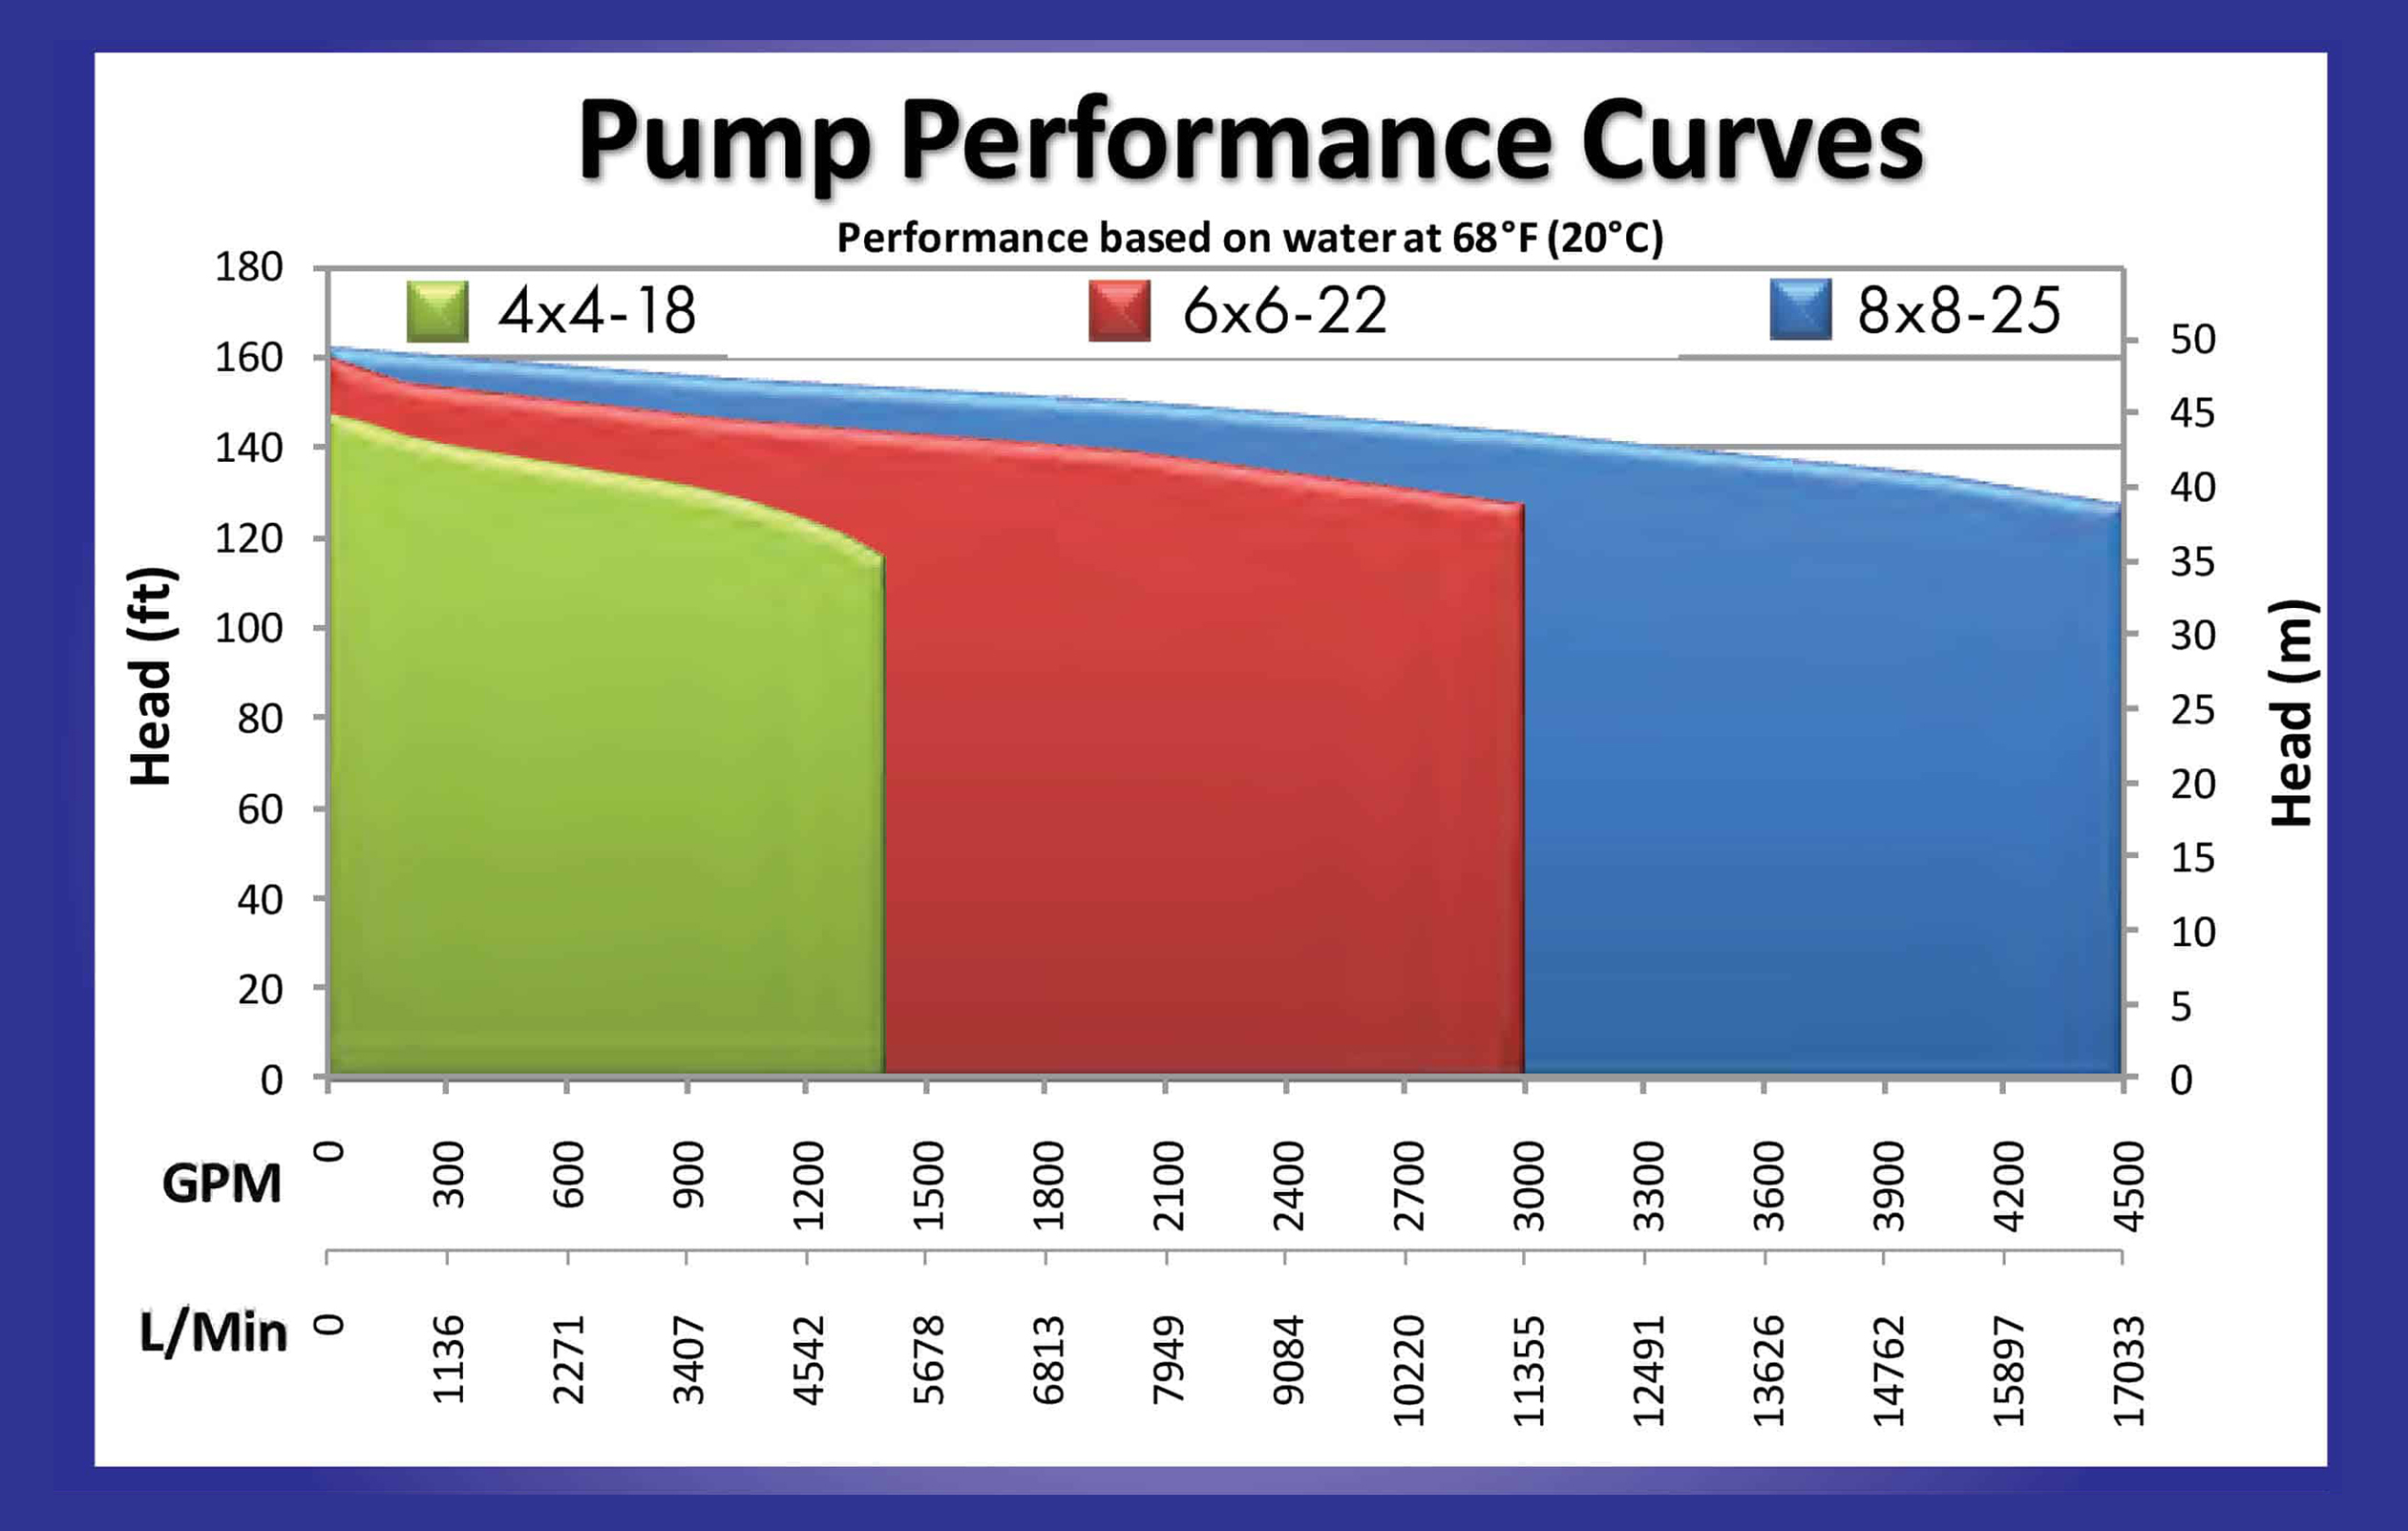 VMI Pump Performance Curves